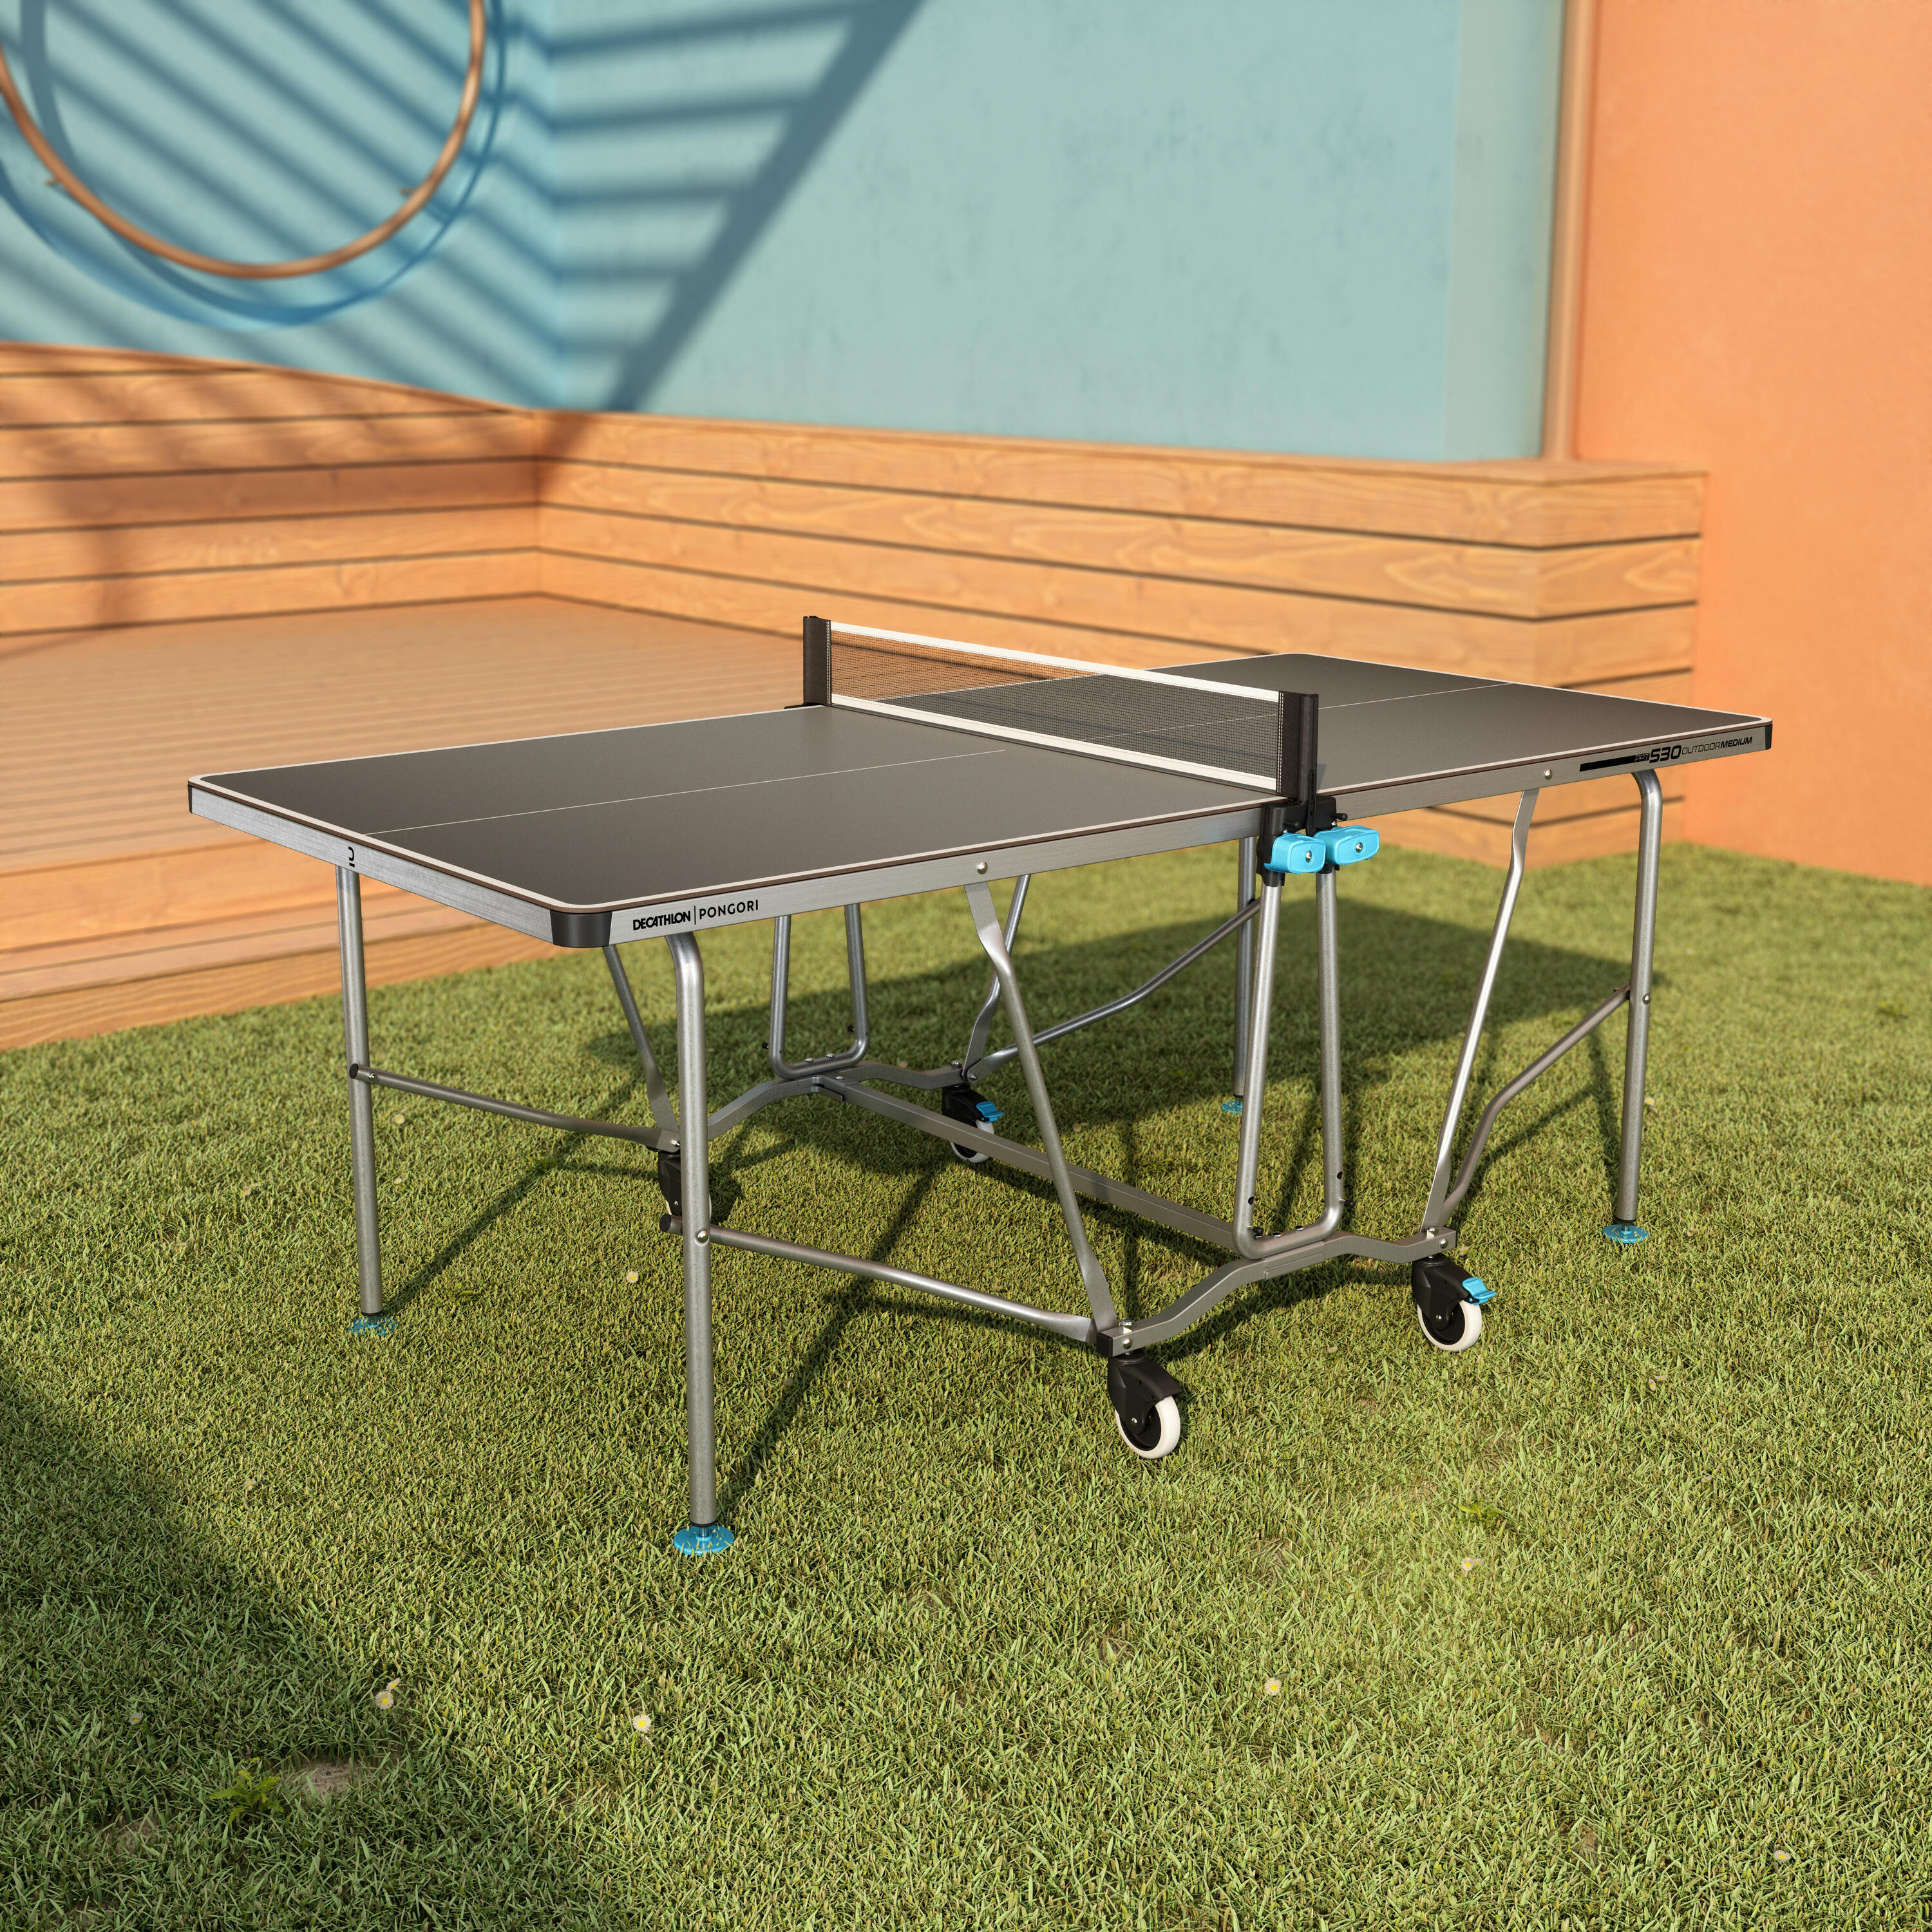 Table Tennis Table PPT 530 Outdoor Medium.2 3/11